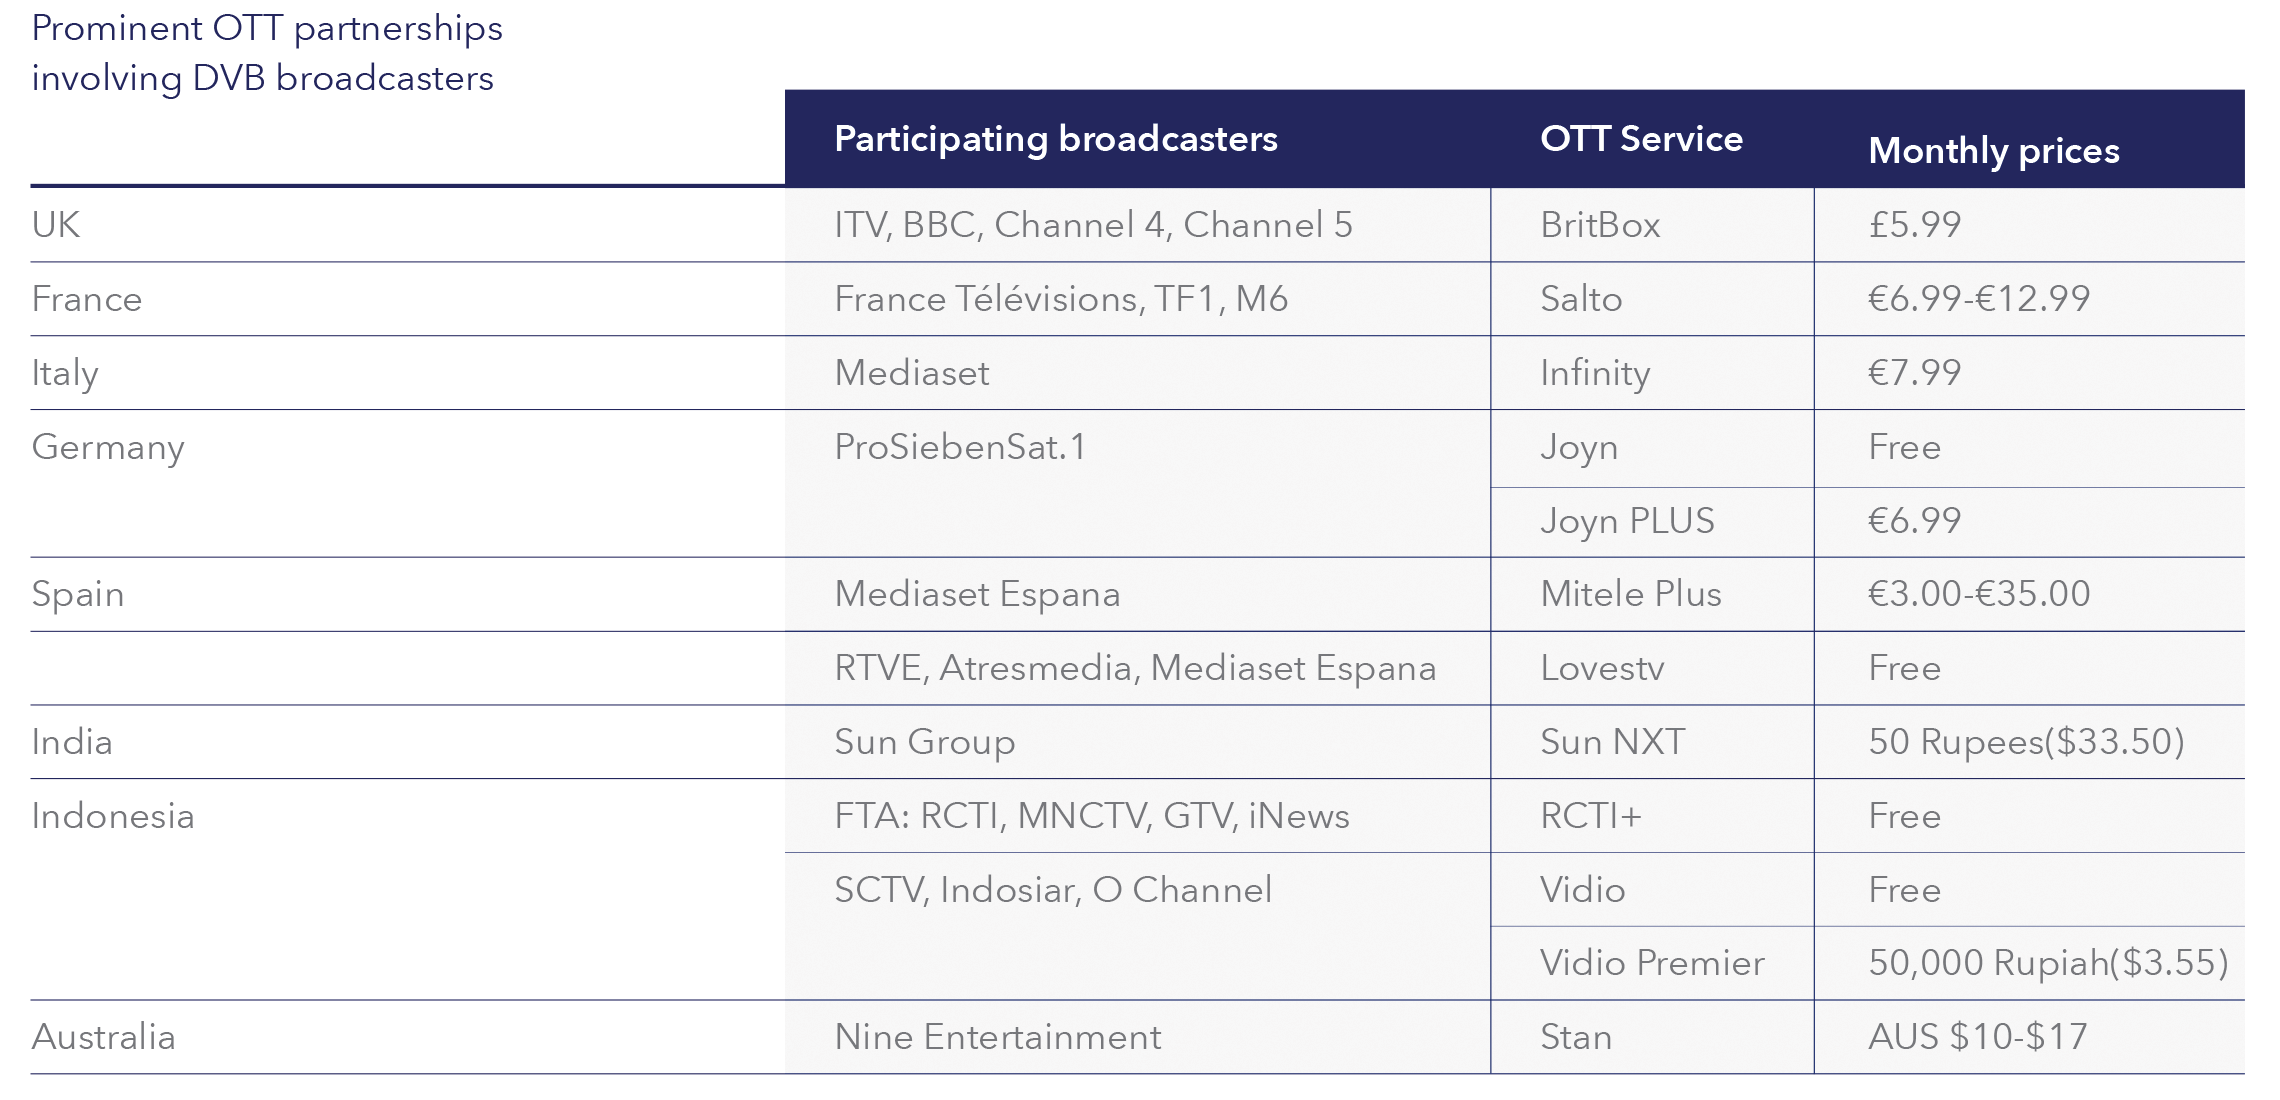 chart of prominent OTT partnerships involving DVB broadcasters